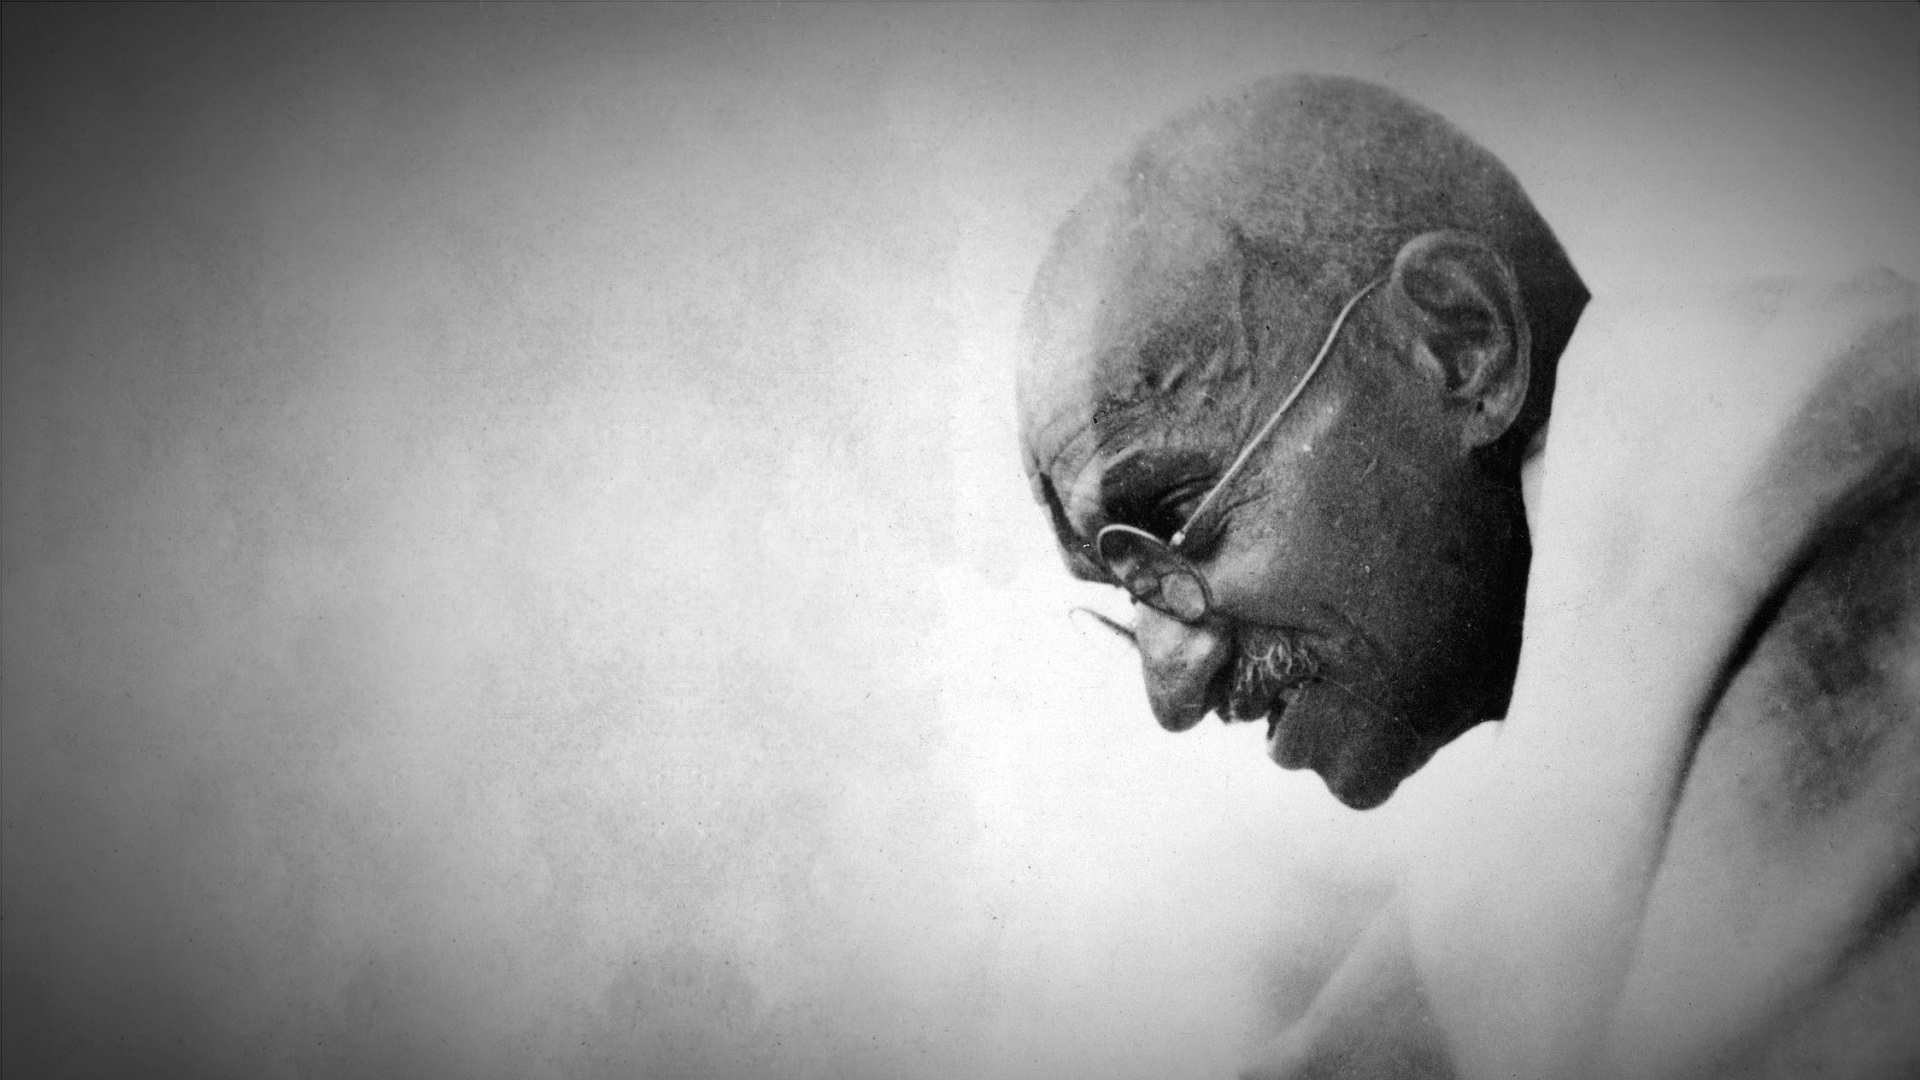 Mahatma Gandhi HD Wallpaper Image Pictures Photos